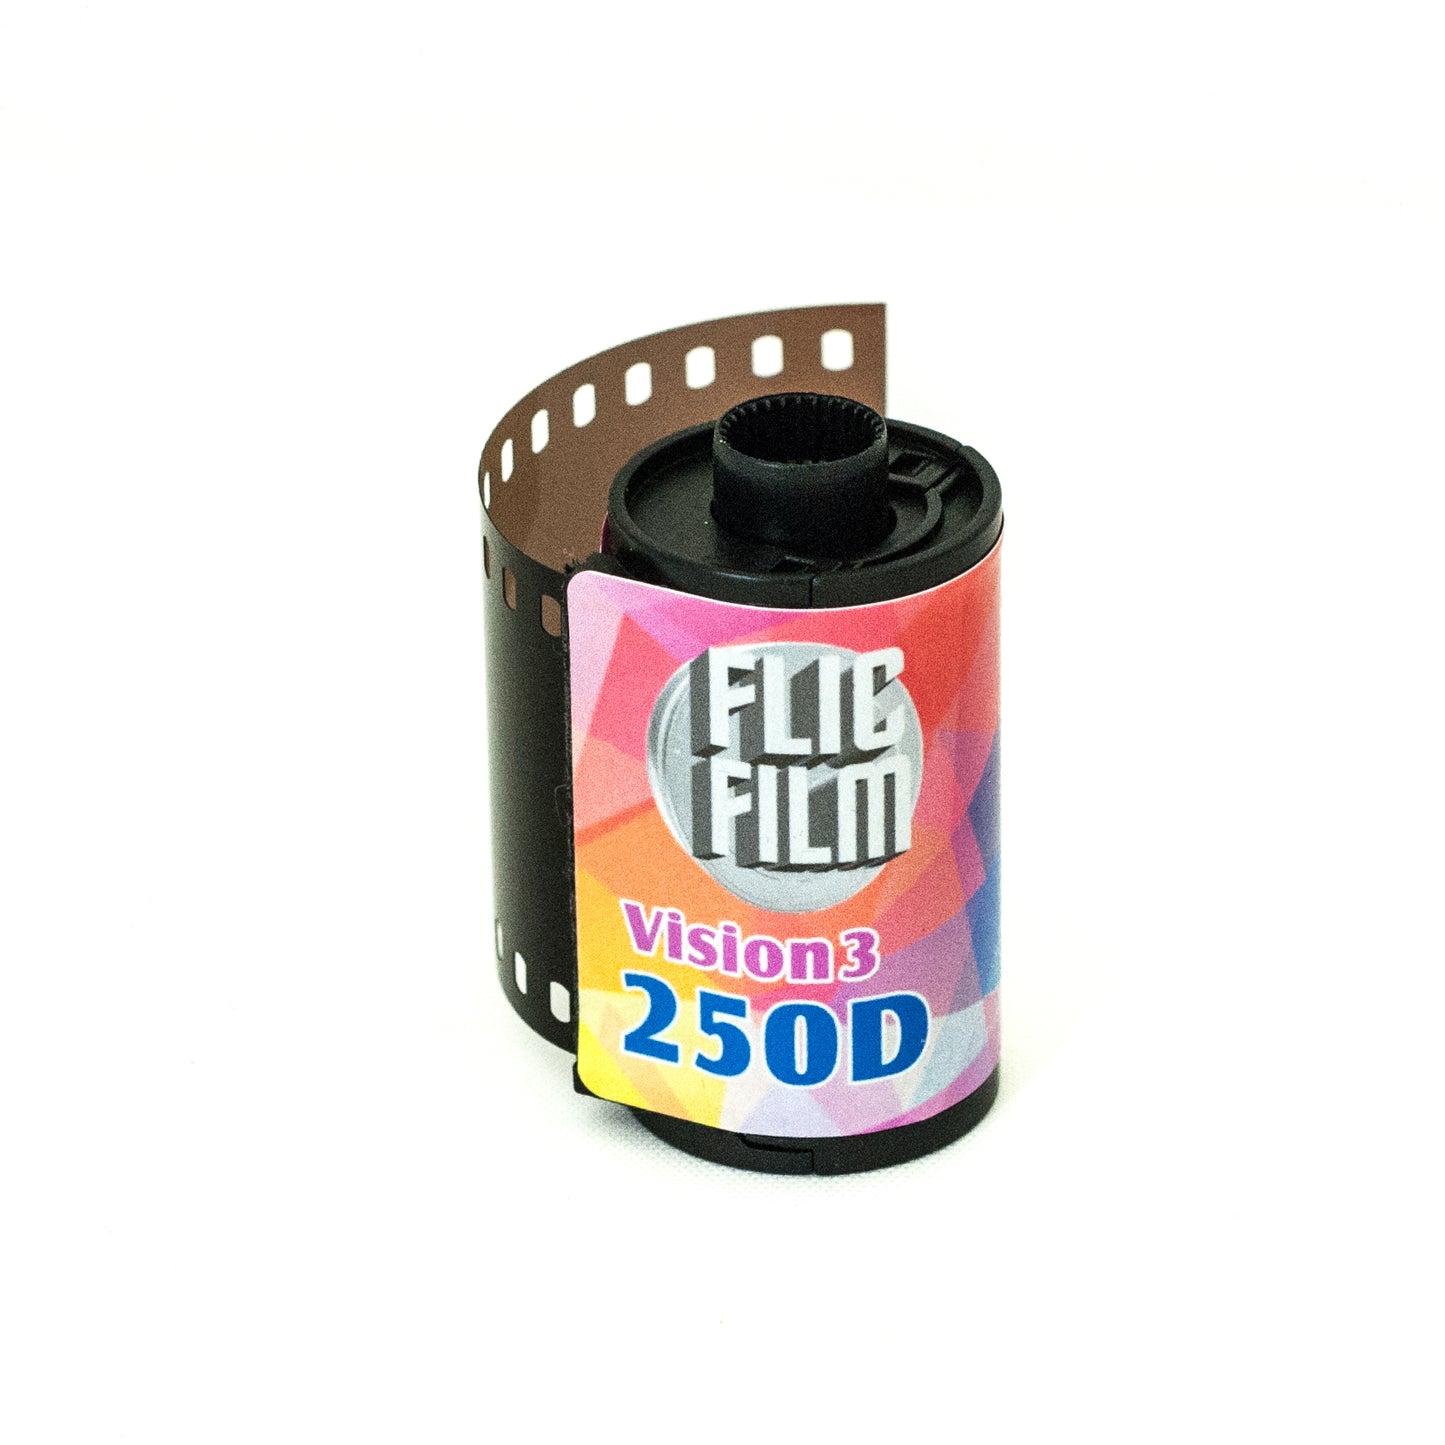 Flic Film - Kodak Vision3 250D | 35mm - 36 Exposures